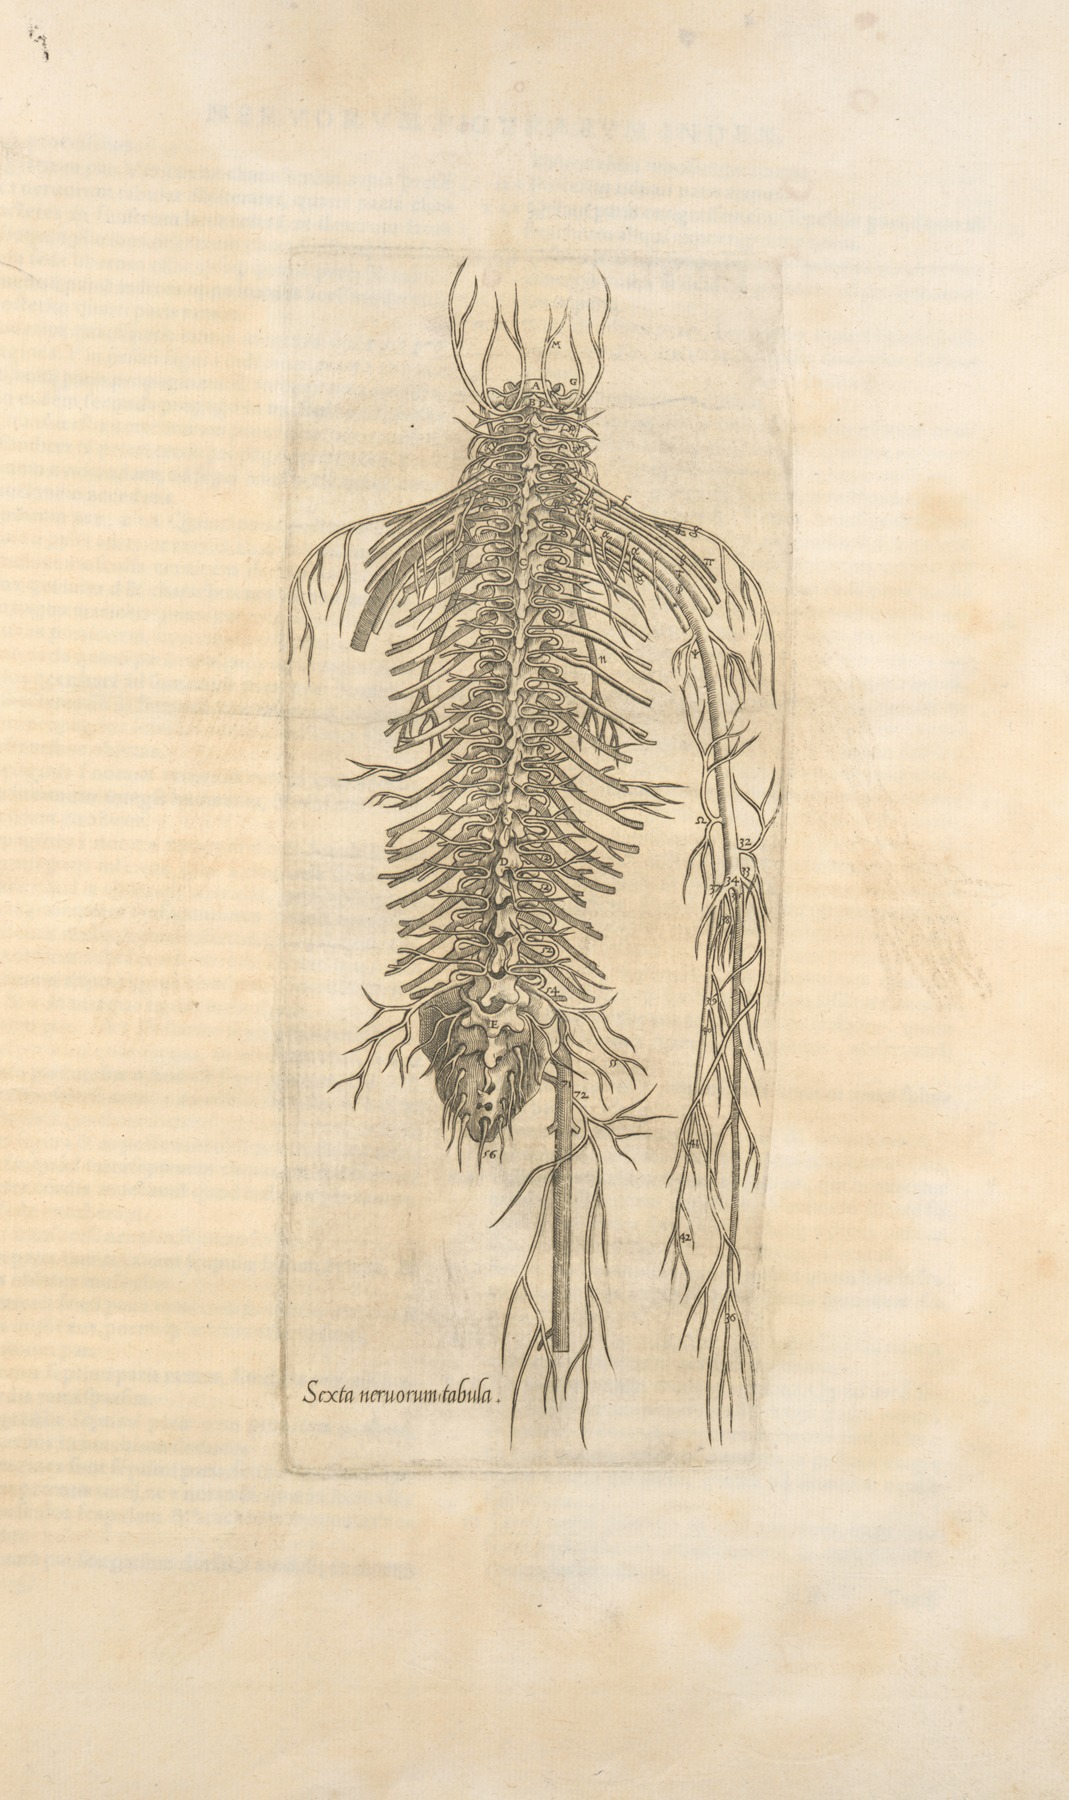 Thomas Geminus - Sexta neruorum tabula. [Nerves of the spine]